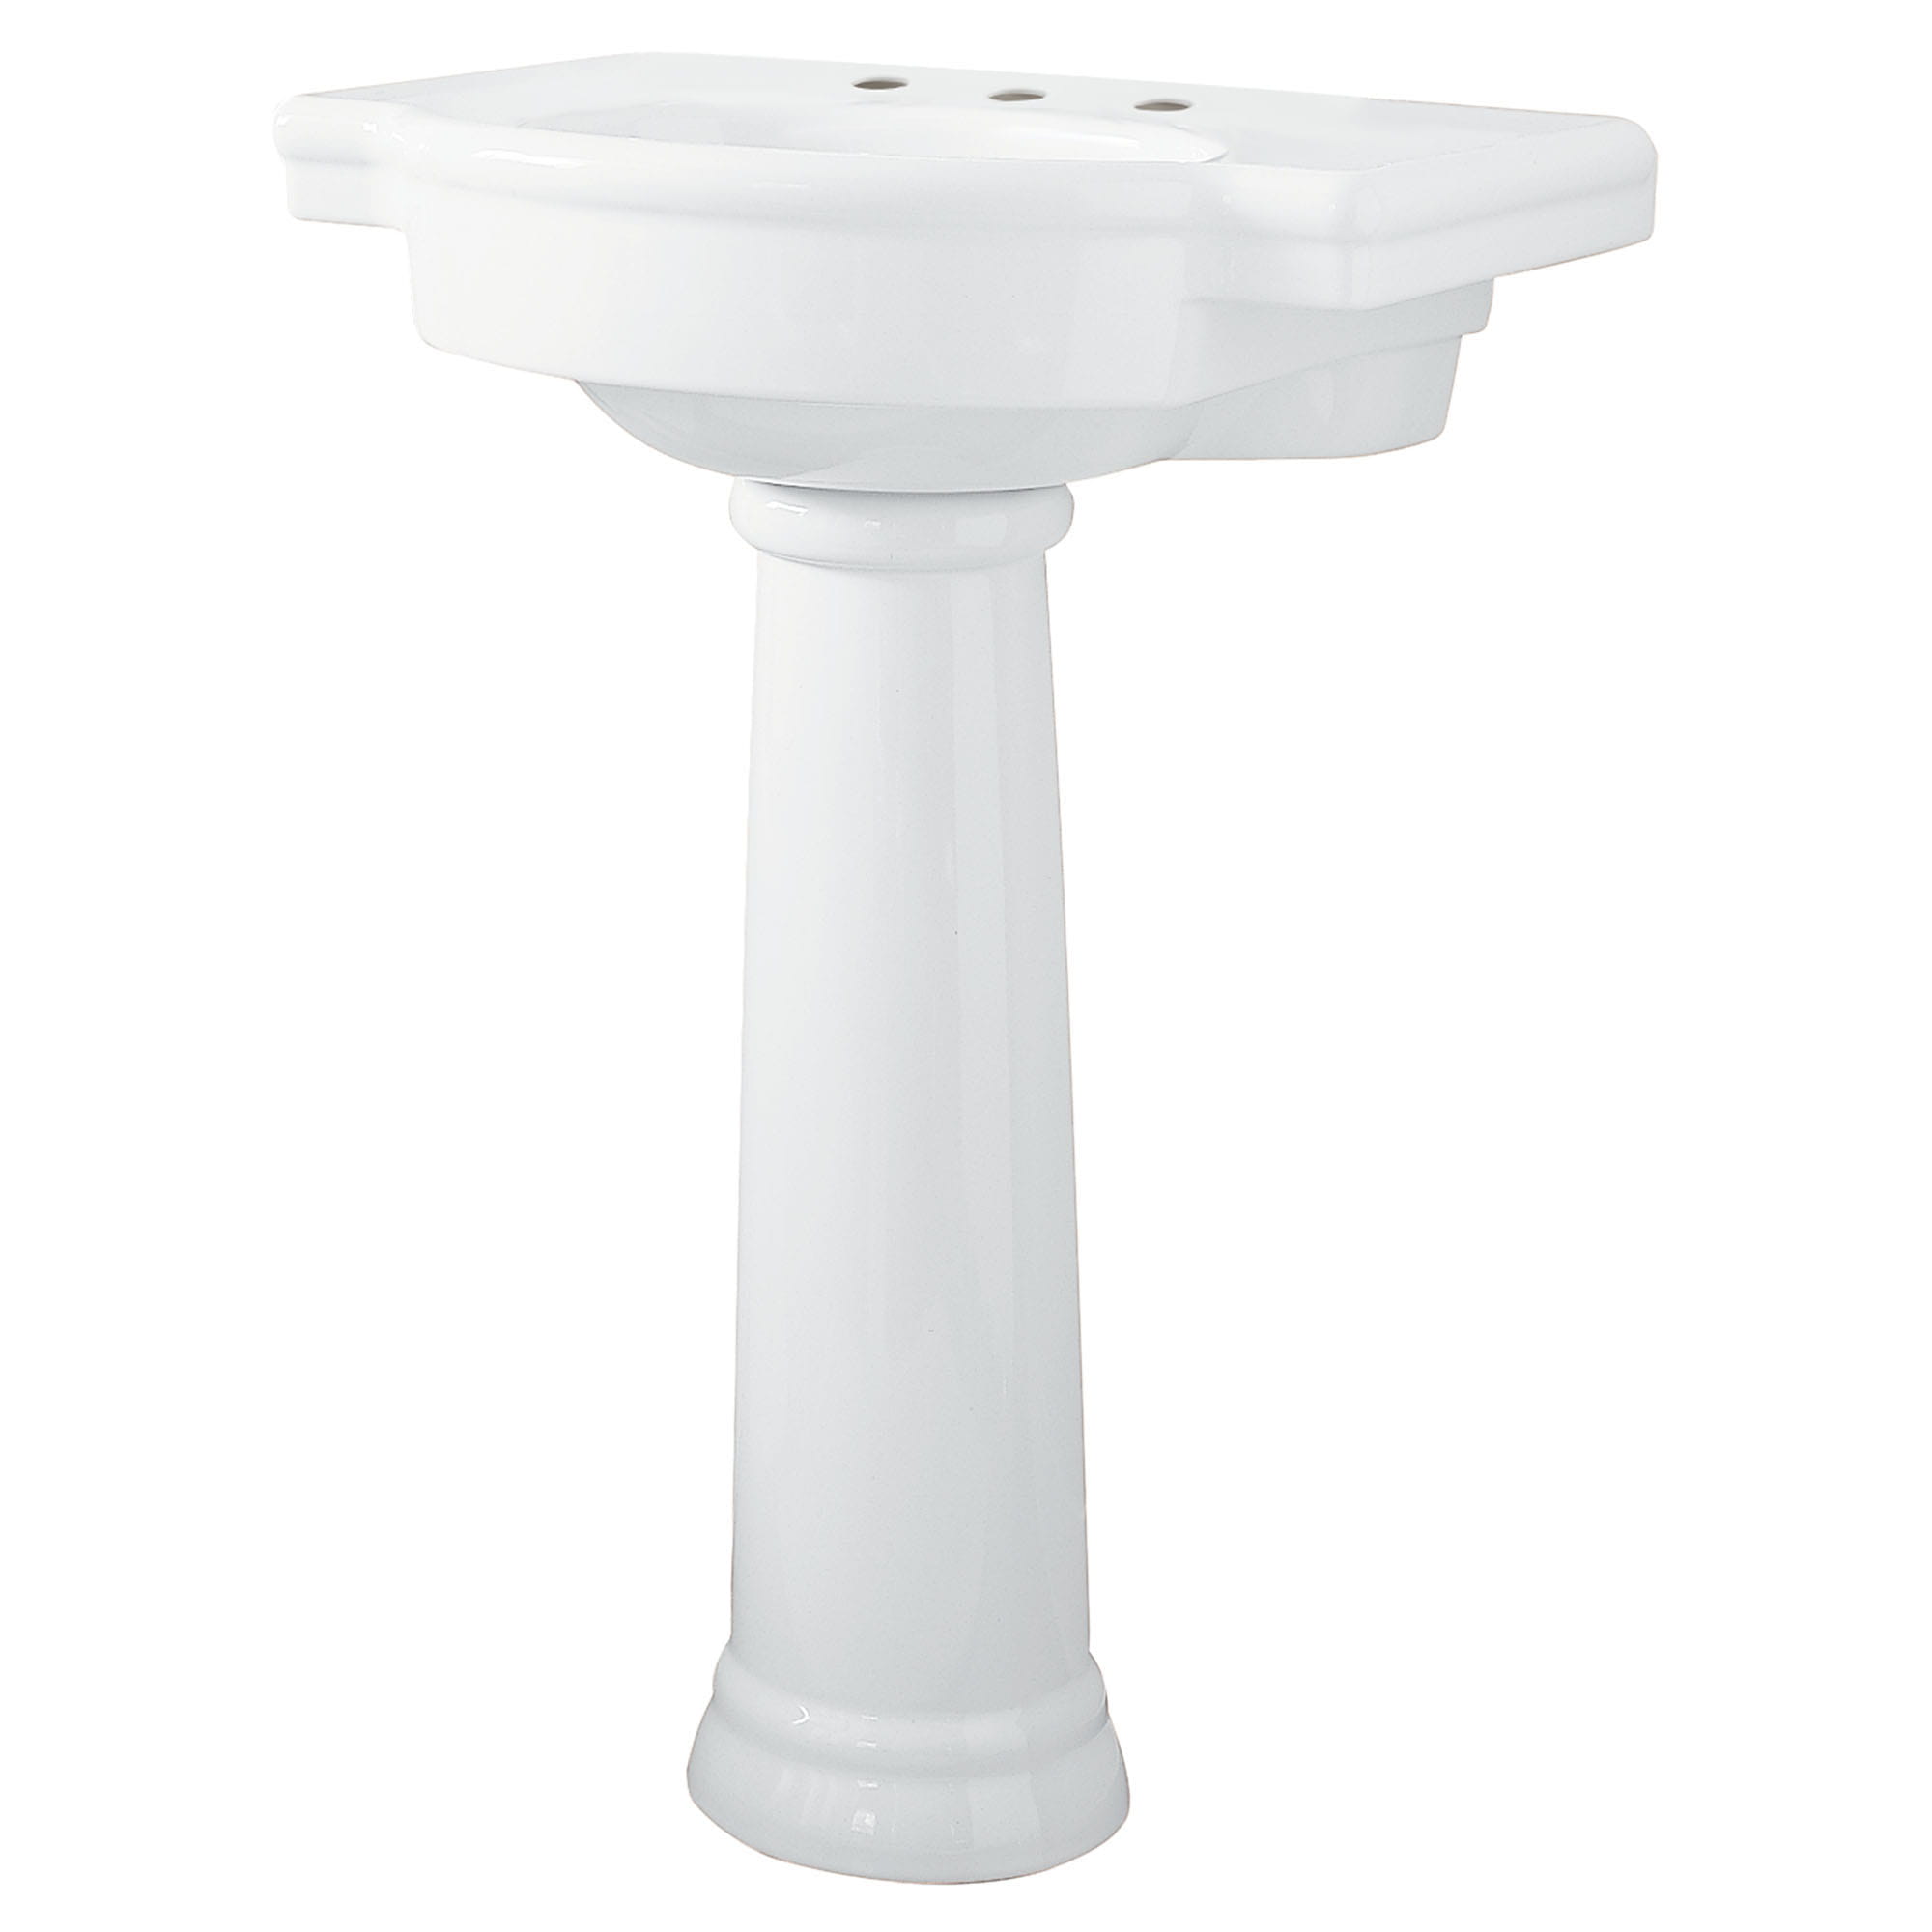 Retrospect 8 Inch Widespread Pedestal Sink Top and Leg Combination WHITE